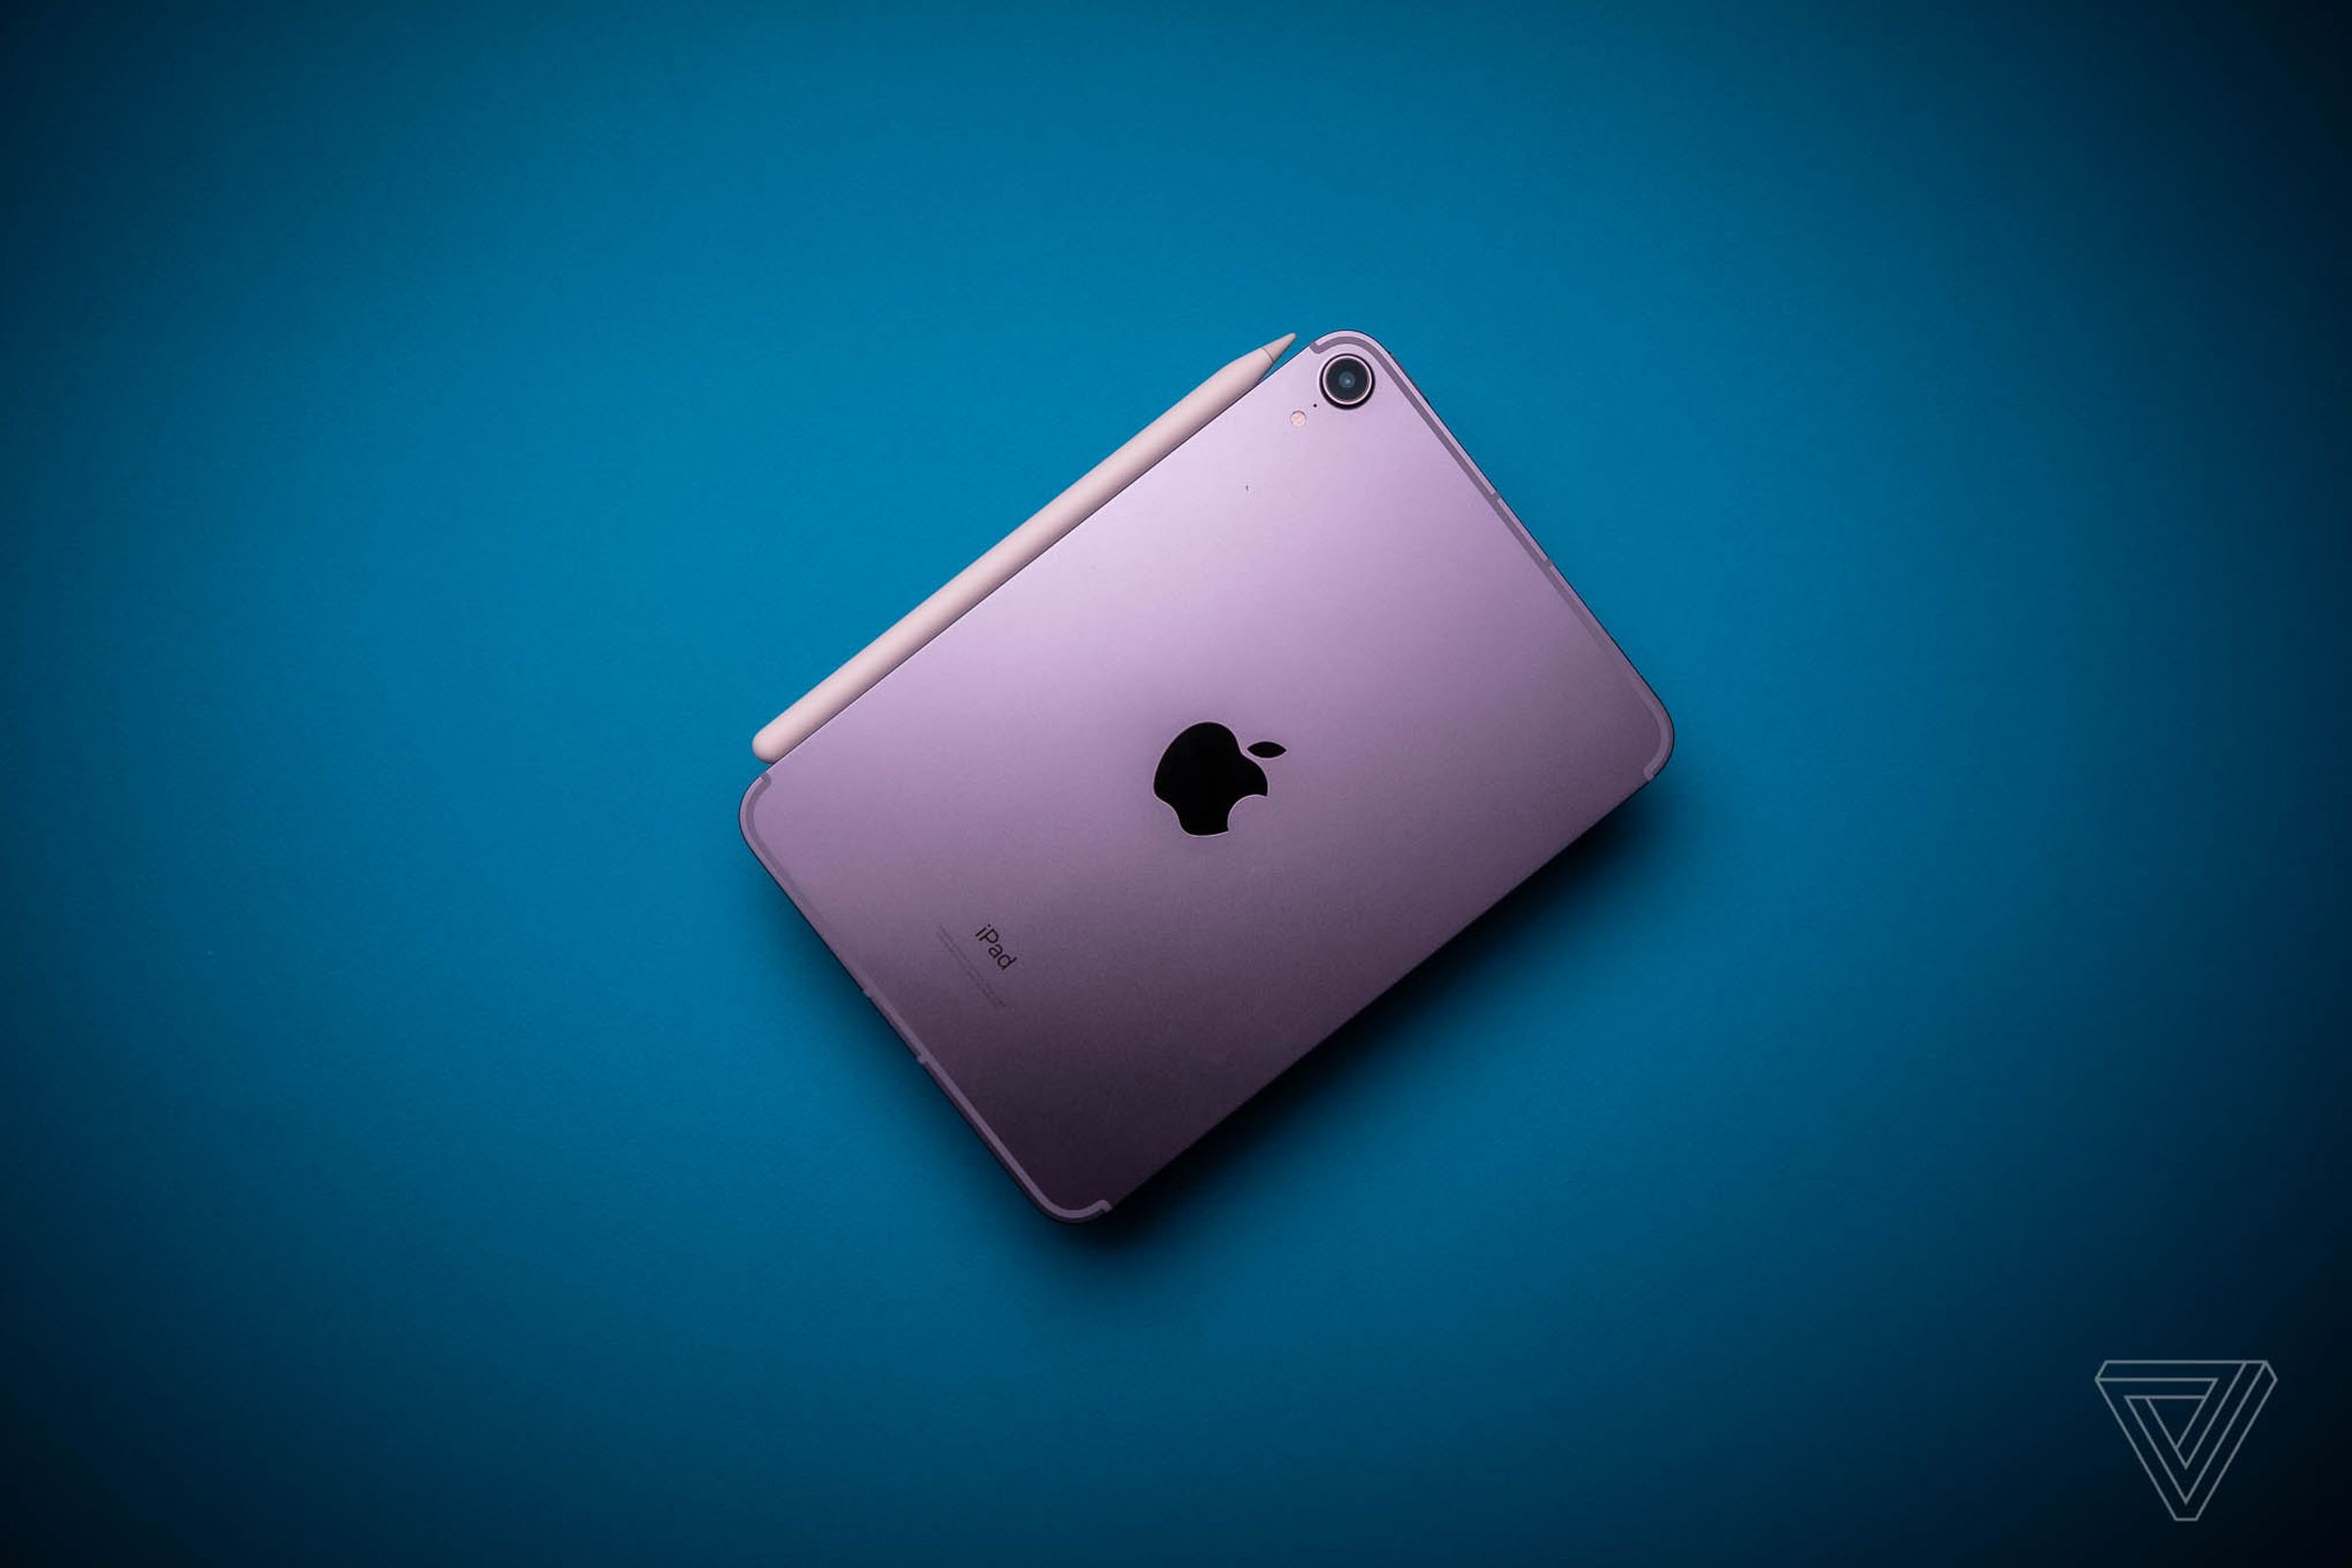 The new Apple iPad Mini